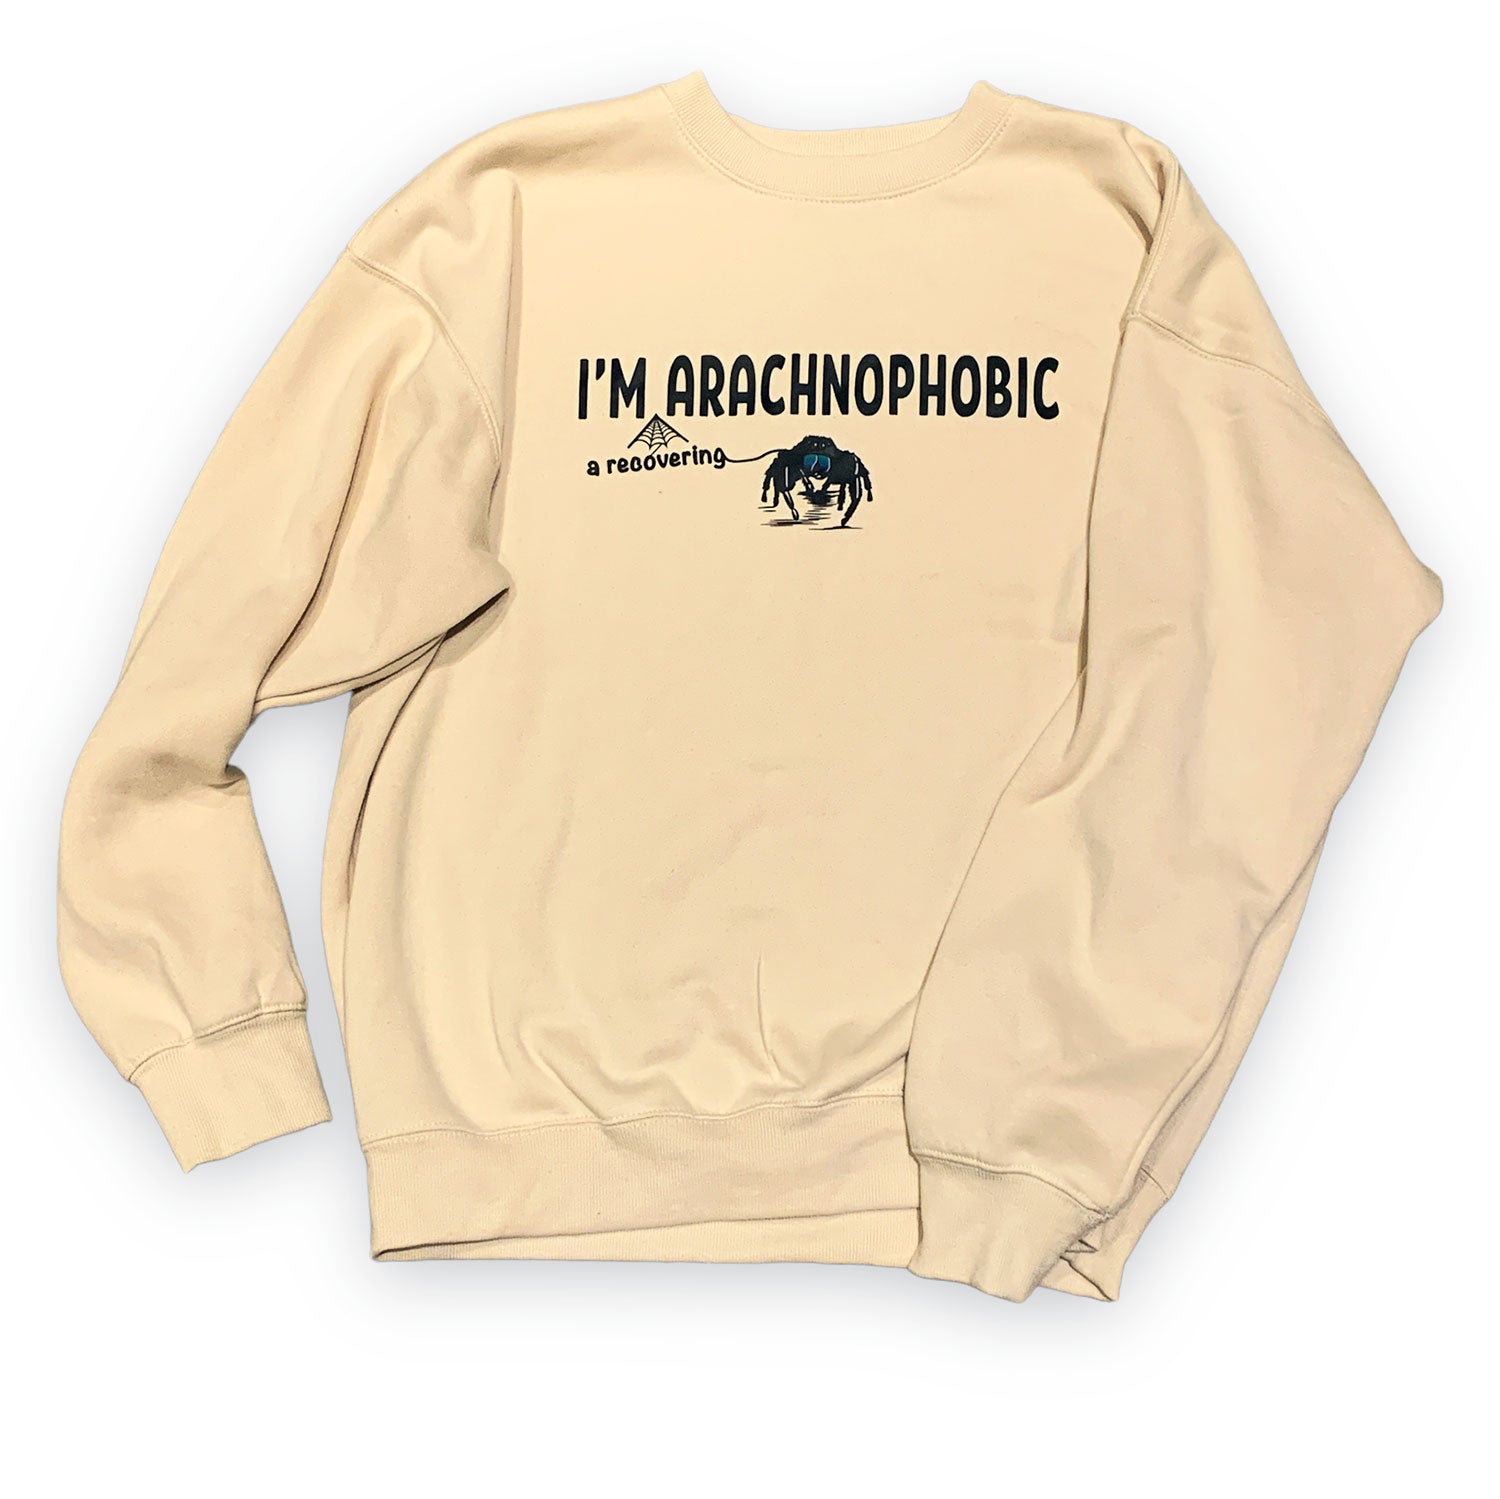 I'm A Recovering Arachnophobic Crewneck Sweatshirt Beige